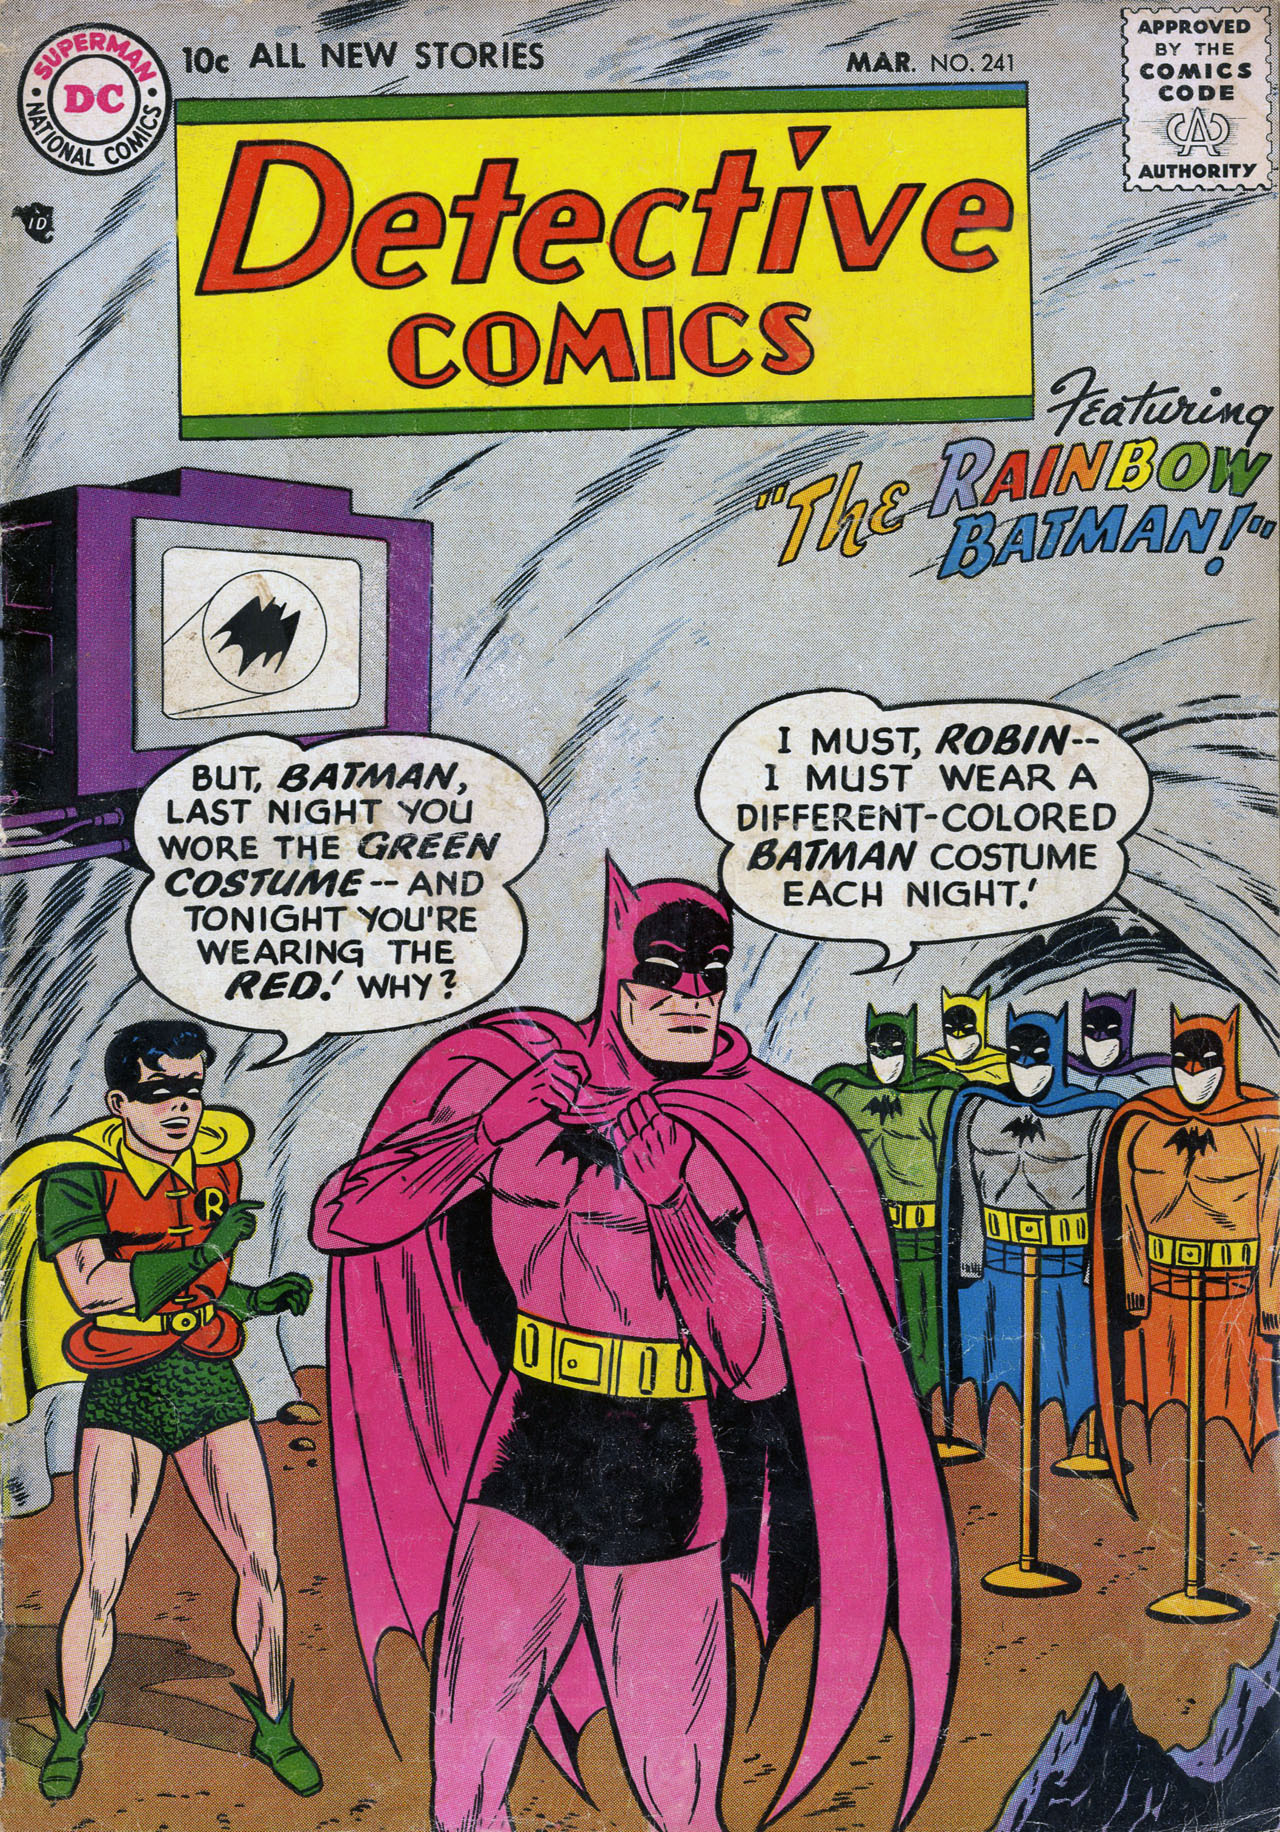 The Rainbow Batman Detective Comics #241 Comic Cover 2" X 3" Fridge Magnet